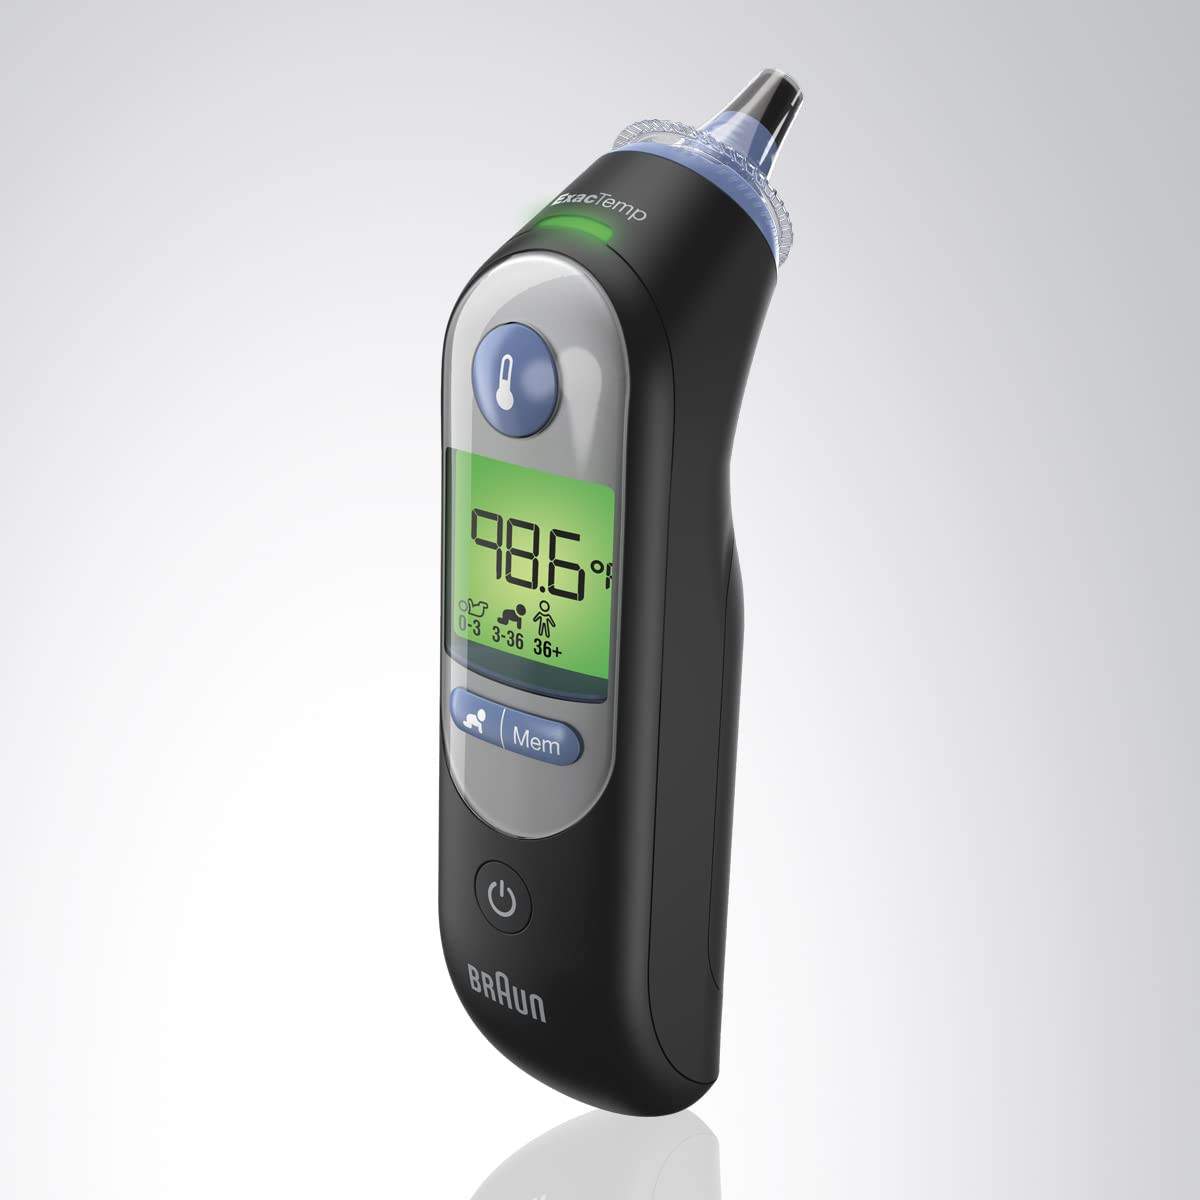 ThermoScan® 7 IRT6520｜BRAUN Healthcare